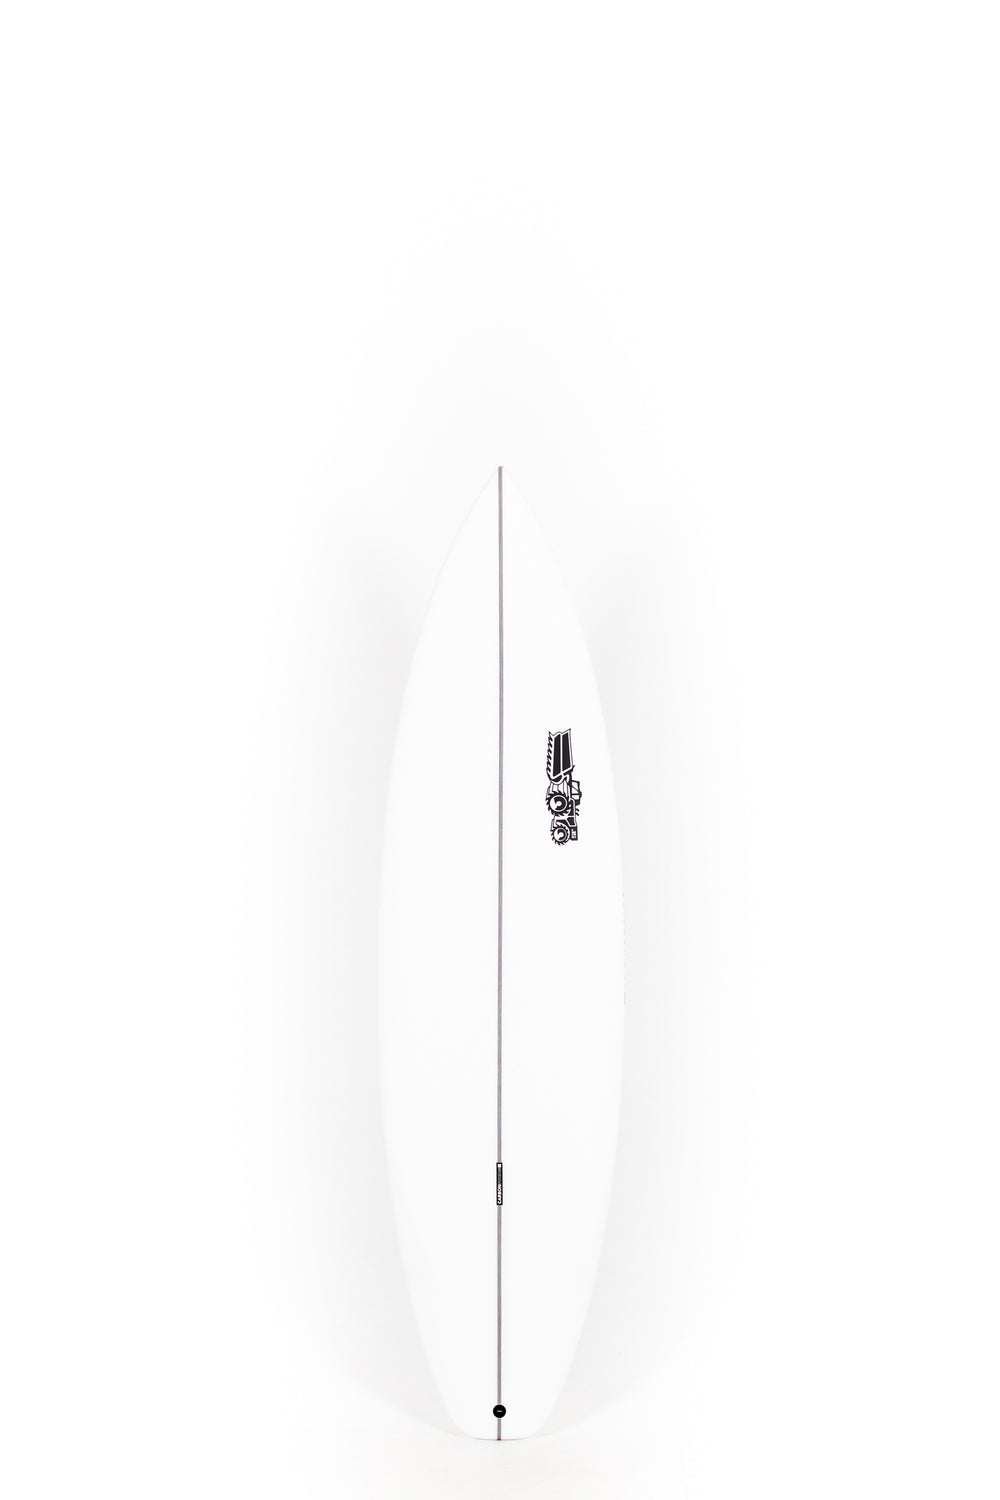 Pukas Surf Shop - JS Surfboards - MONSTA 2020 - 6'2